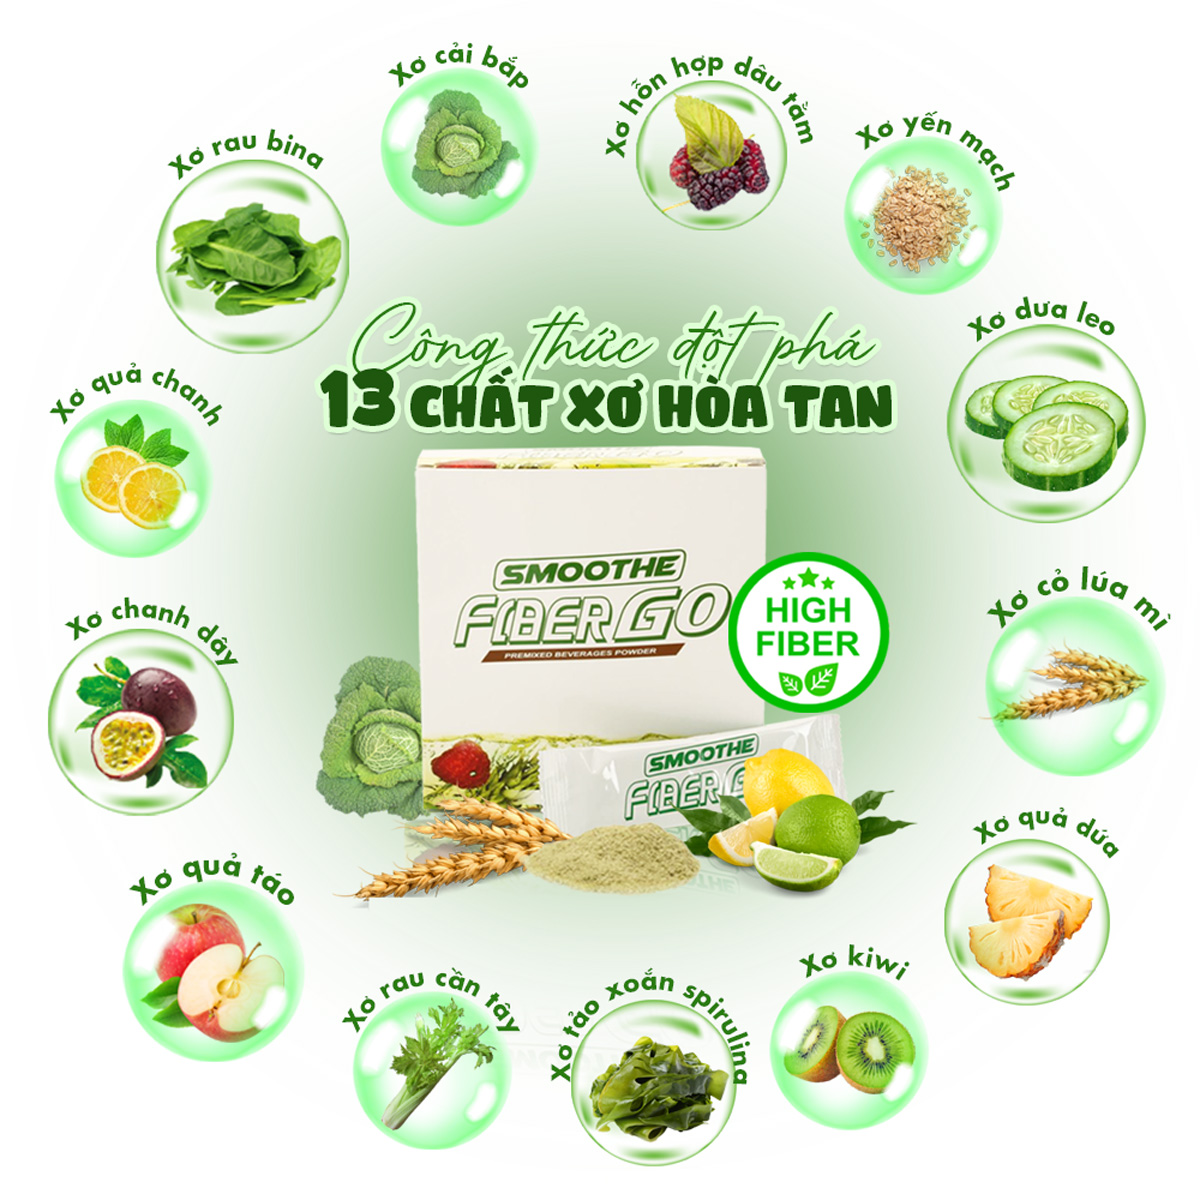 Thai-doc-ruot-smoothe-fibergo-dac-tri-tao-bon-ngan-ngua-ung-thu-dai-trang-5